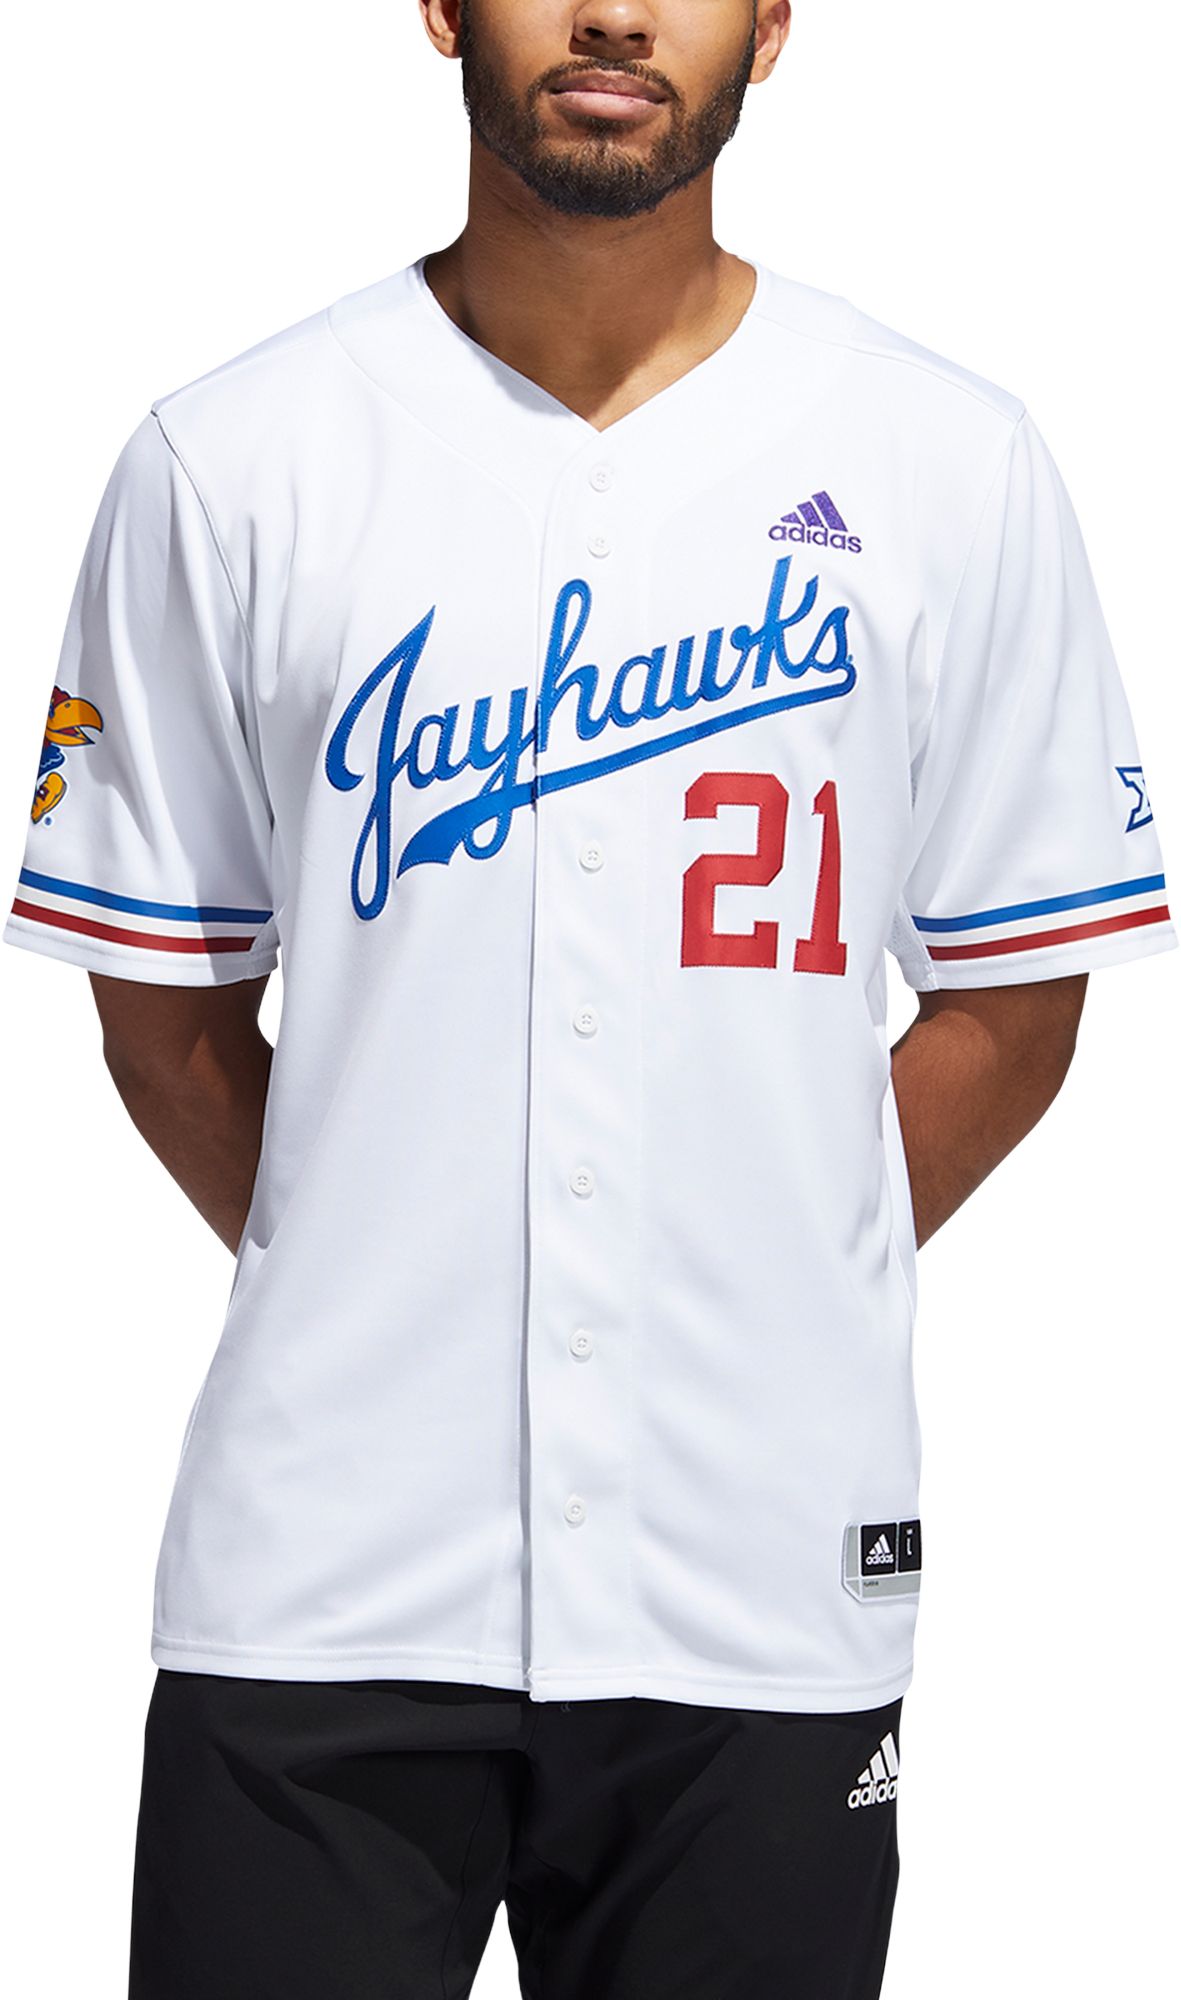 Adidas / Men's Kansas Jayhawks White #21 Replica Baseball Jersey